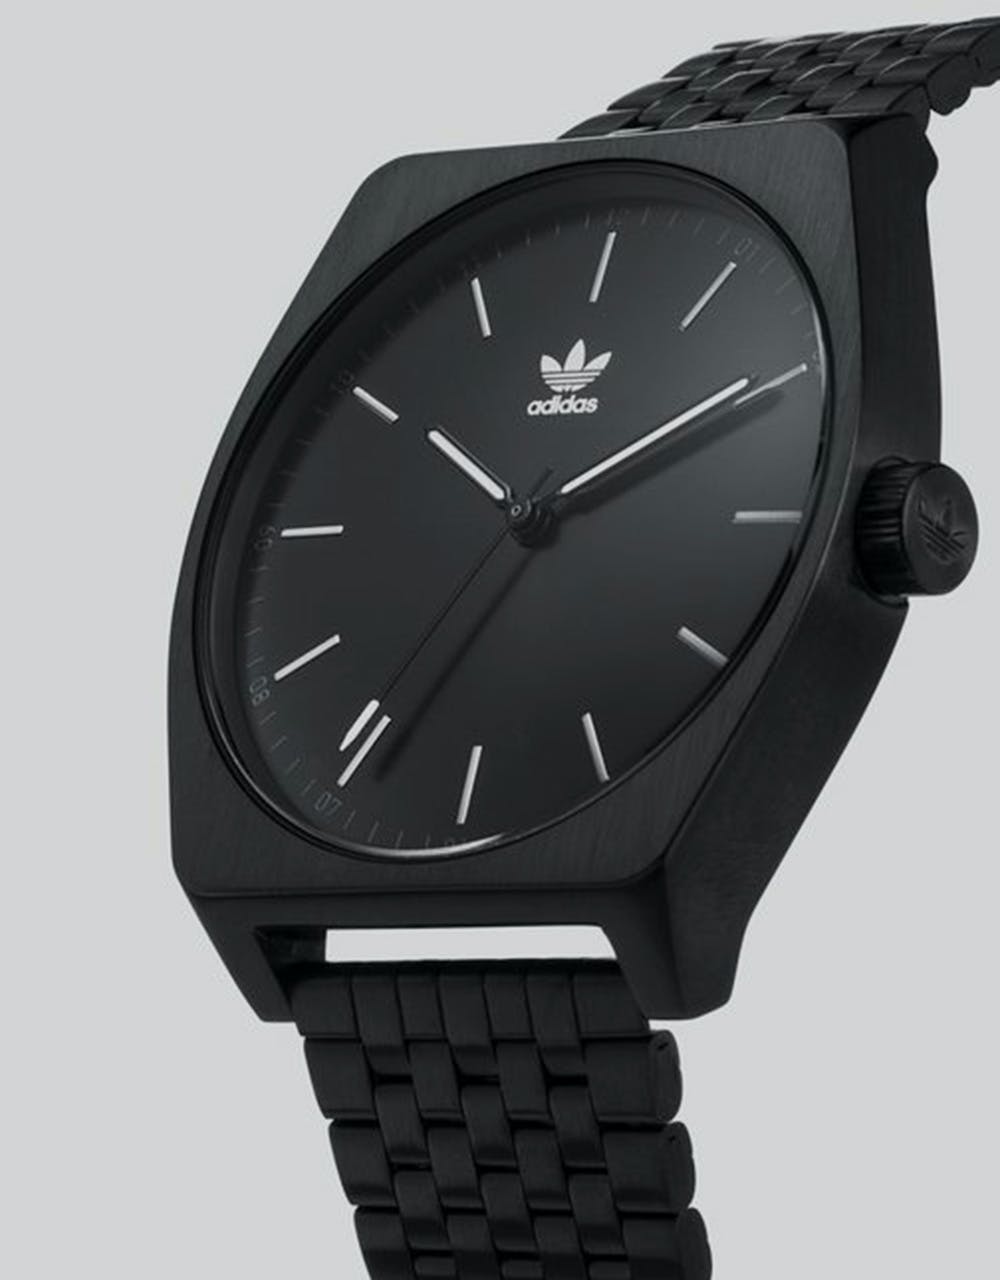 Adidas Process M1 Watch - All Black